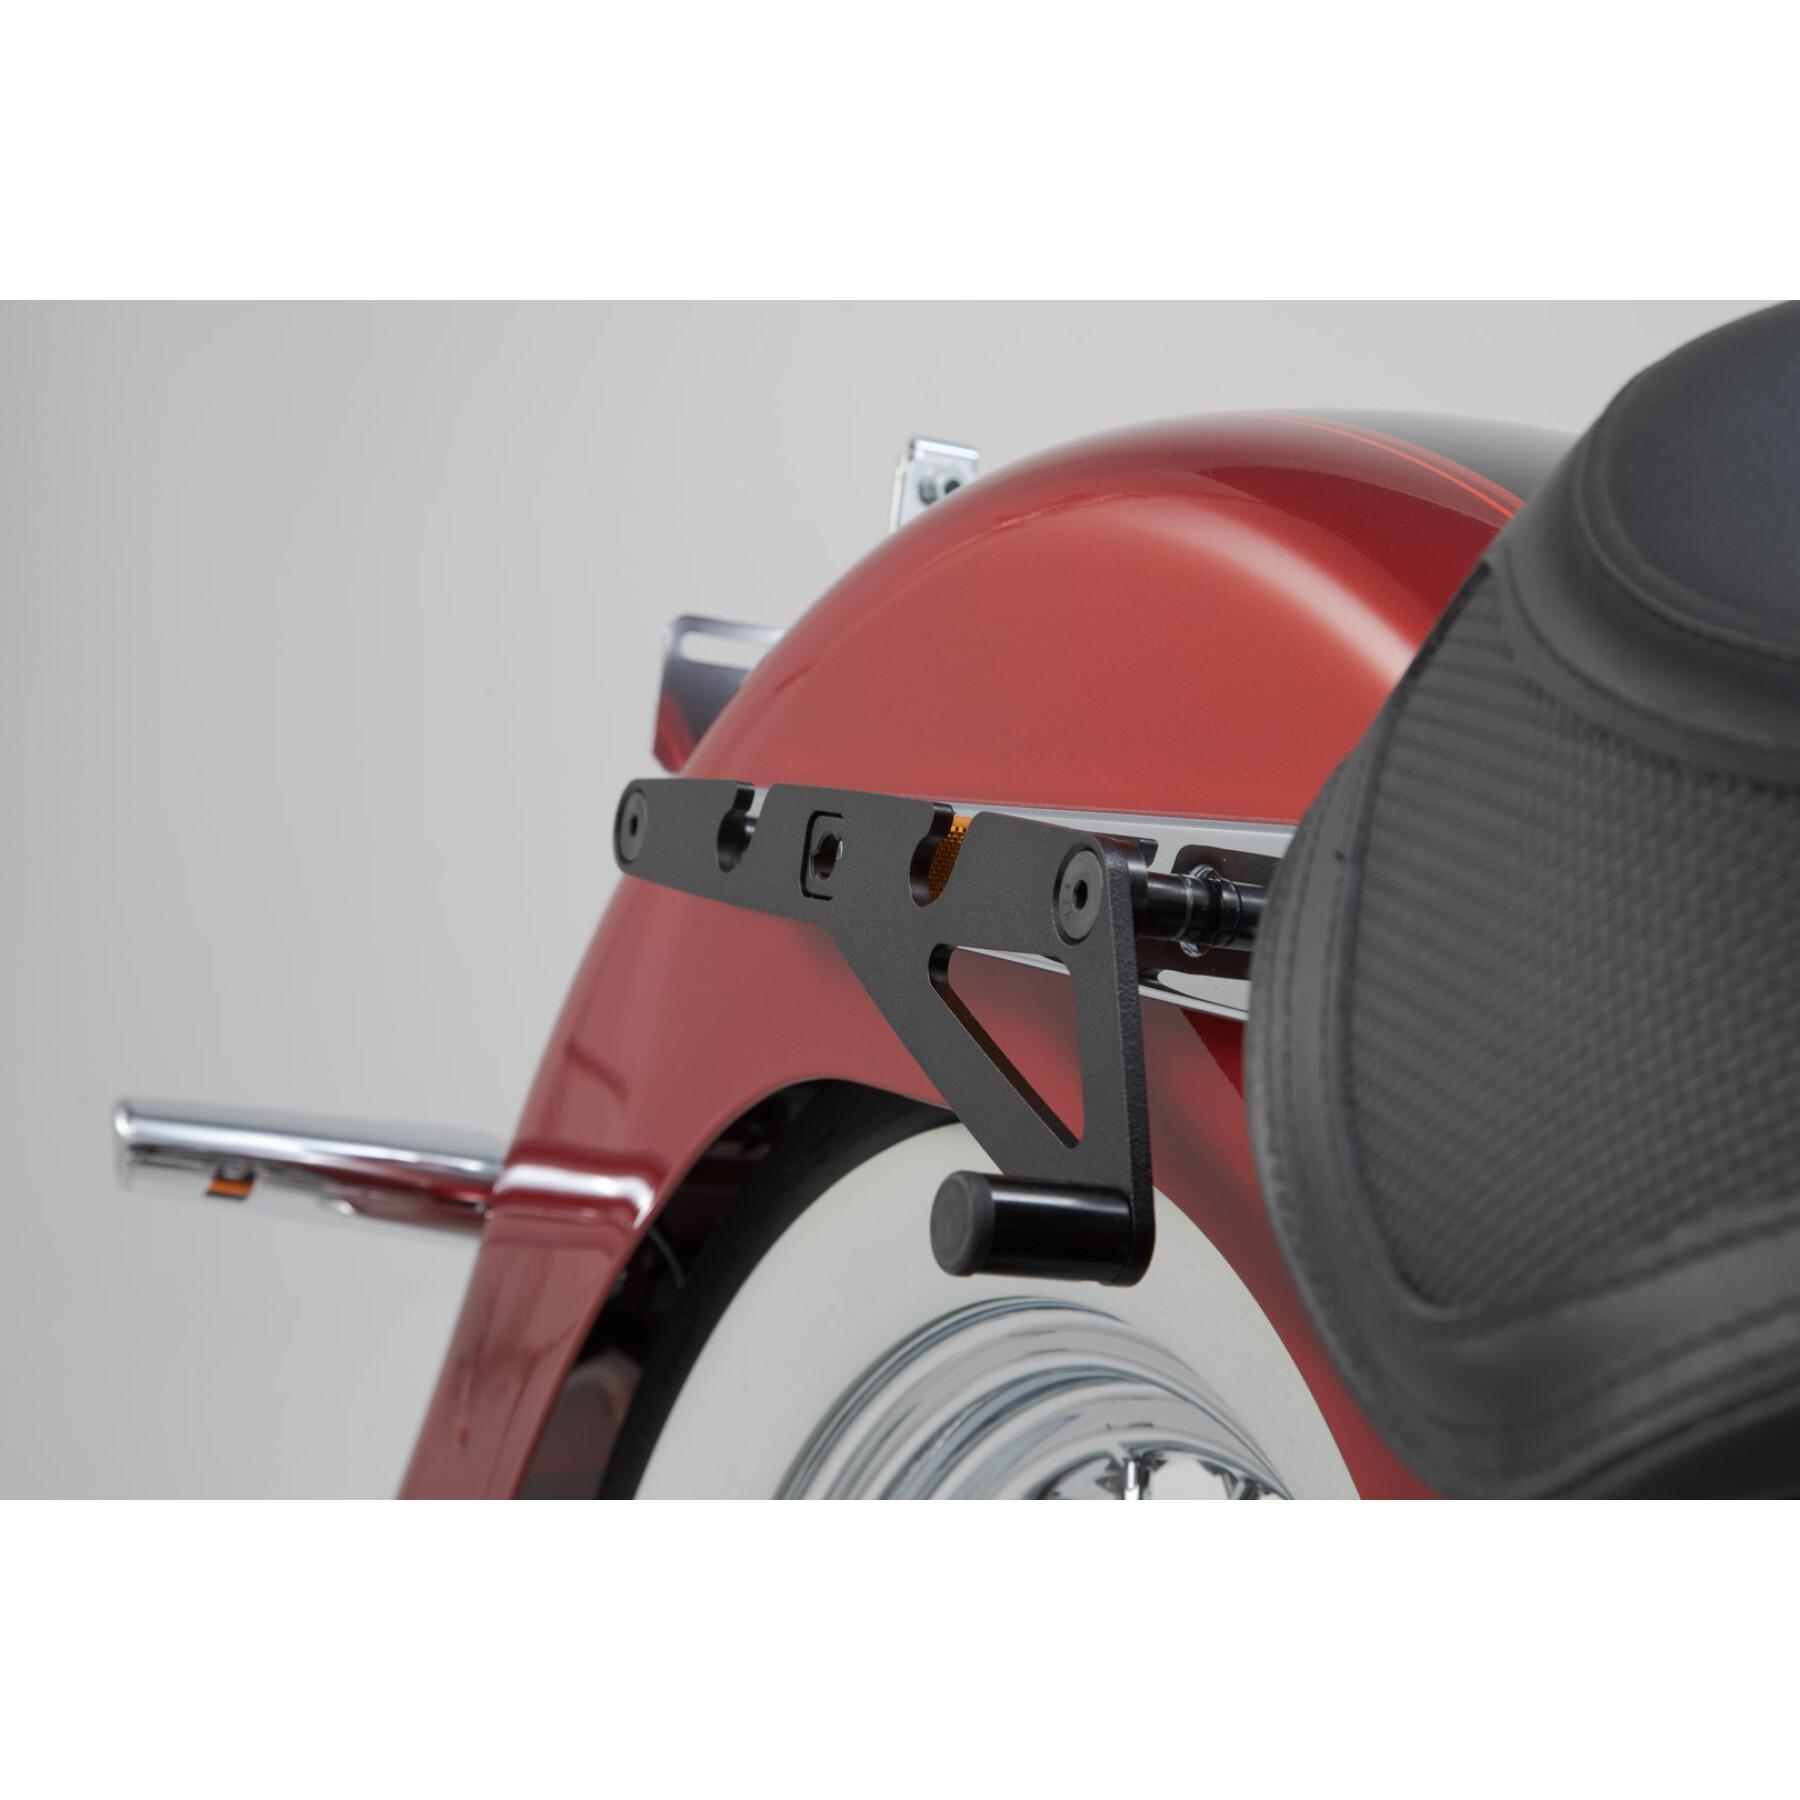 Porta borse laterali per moto slh SW-Motech Harley-Davidson Softail Deluxe (17-).